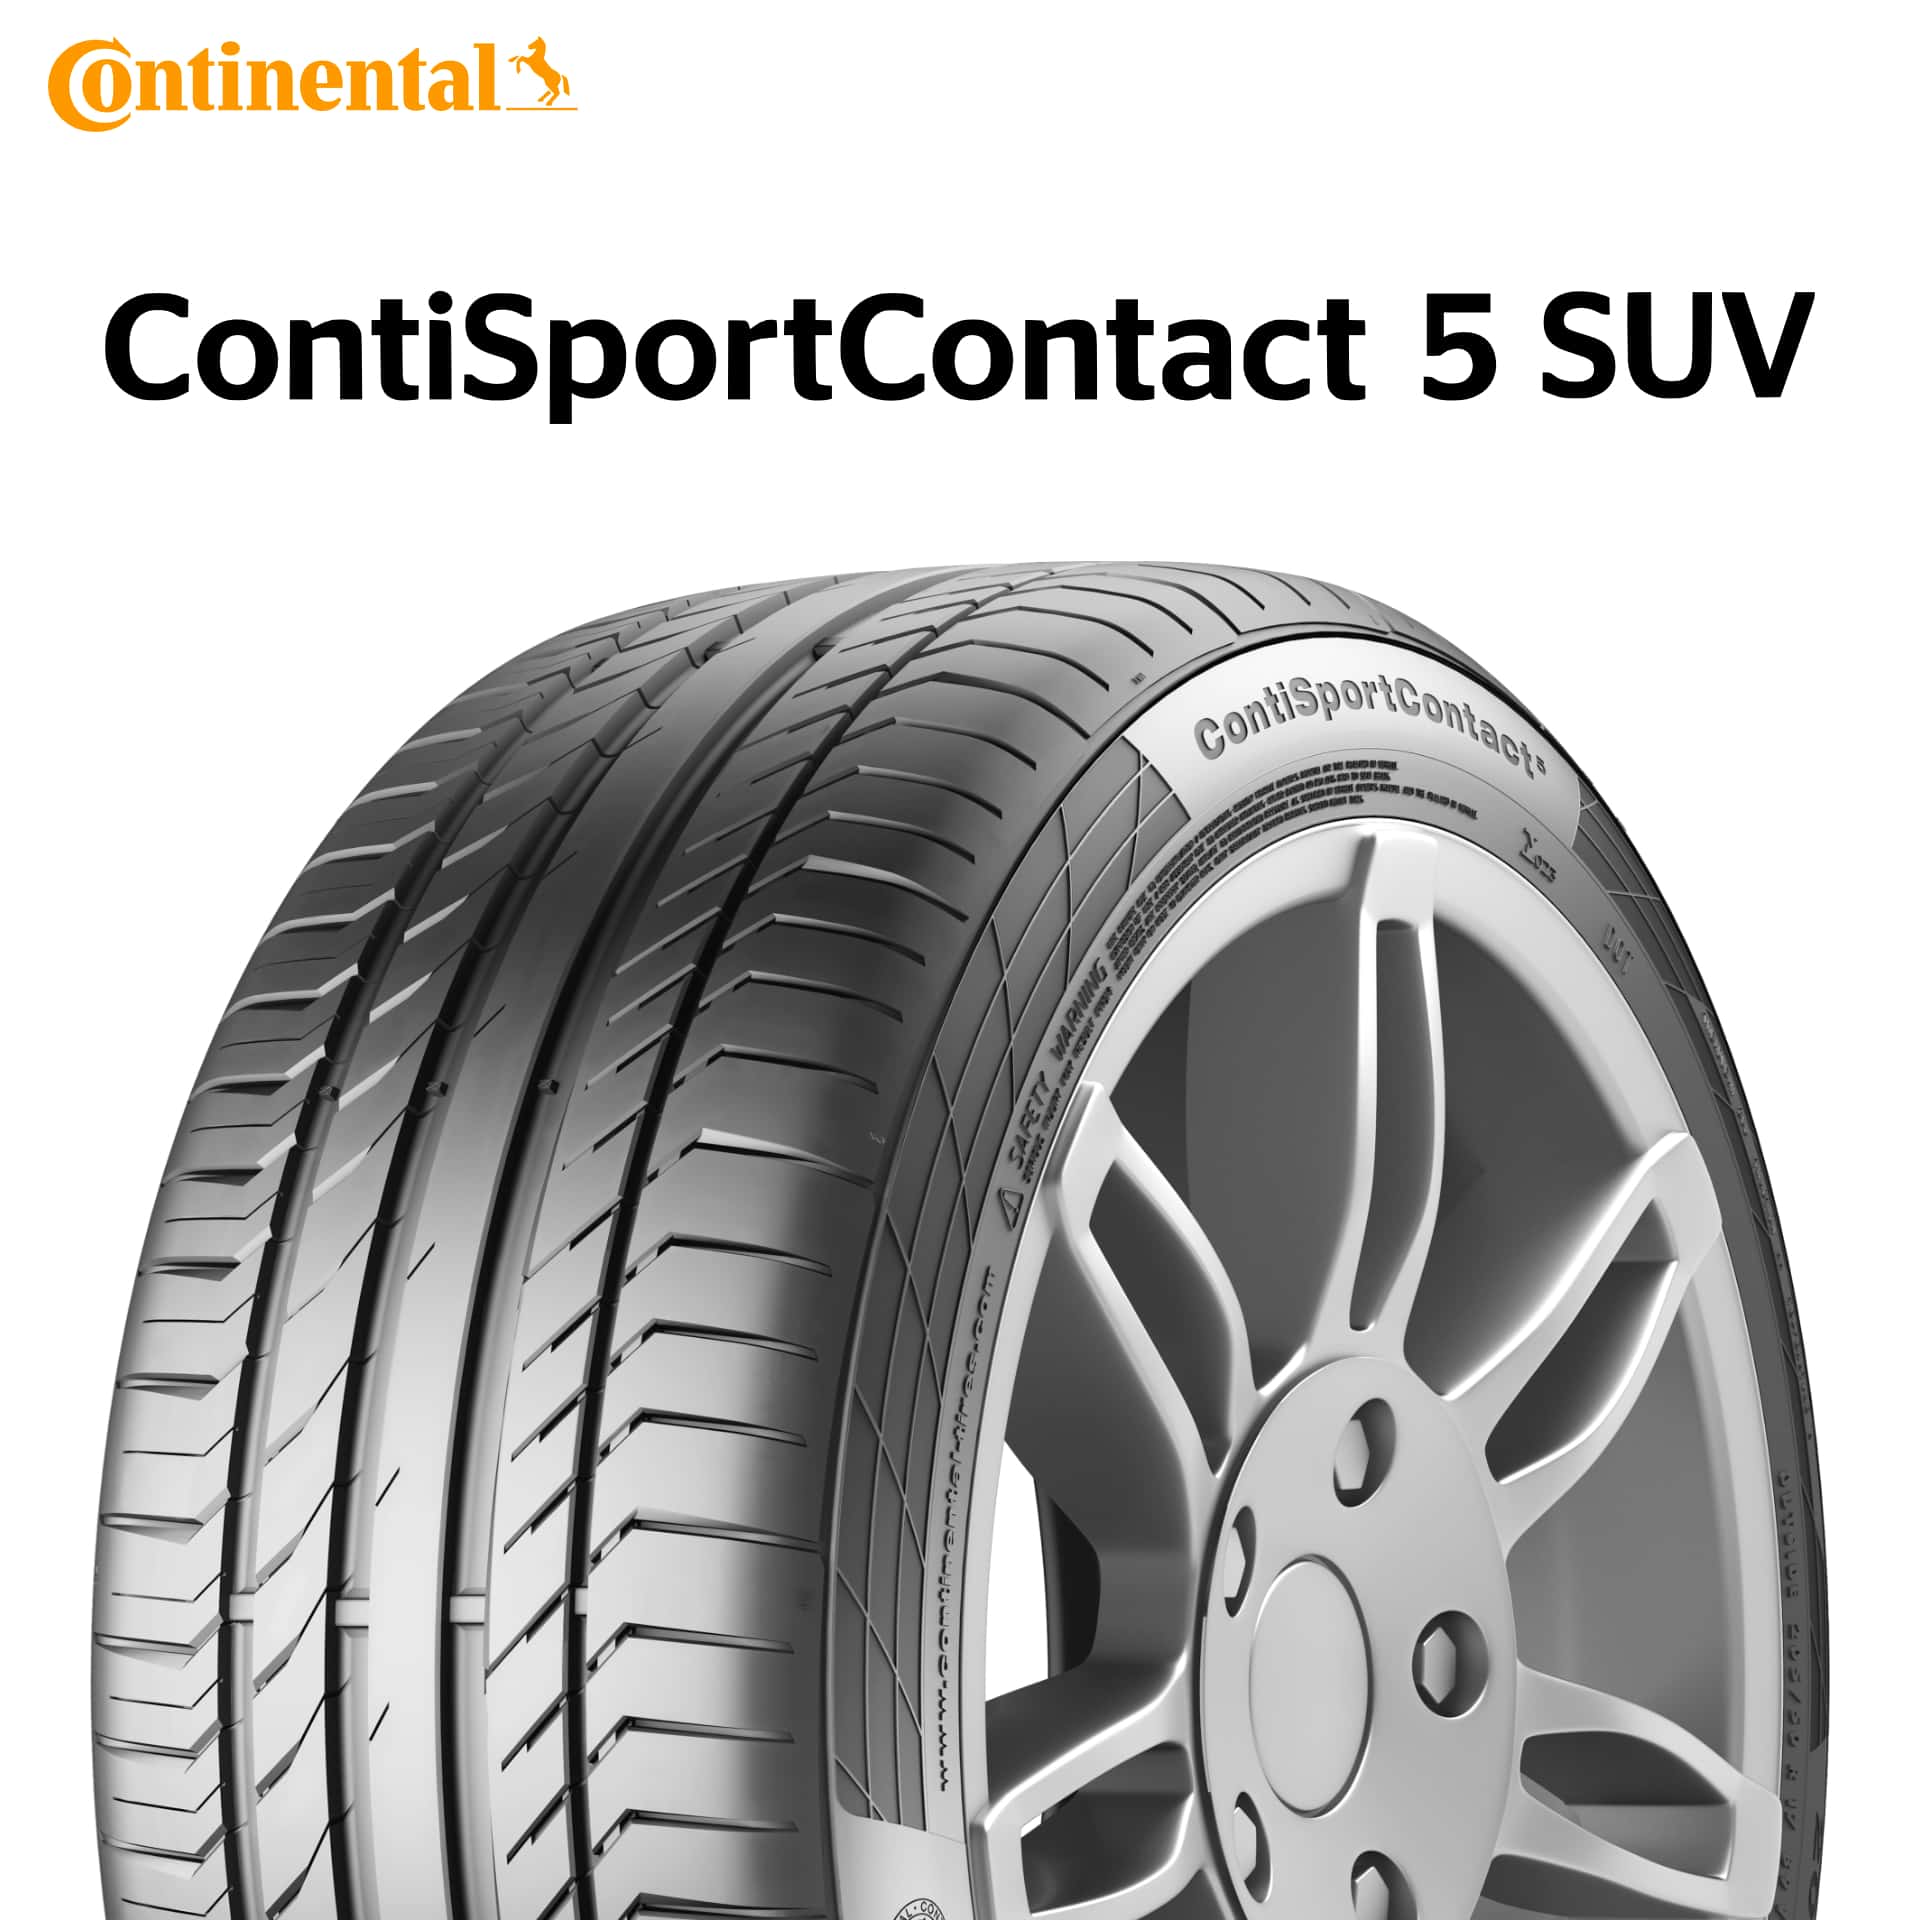 continental contiSportContact 5p mo タイヤ